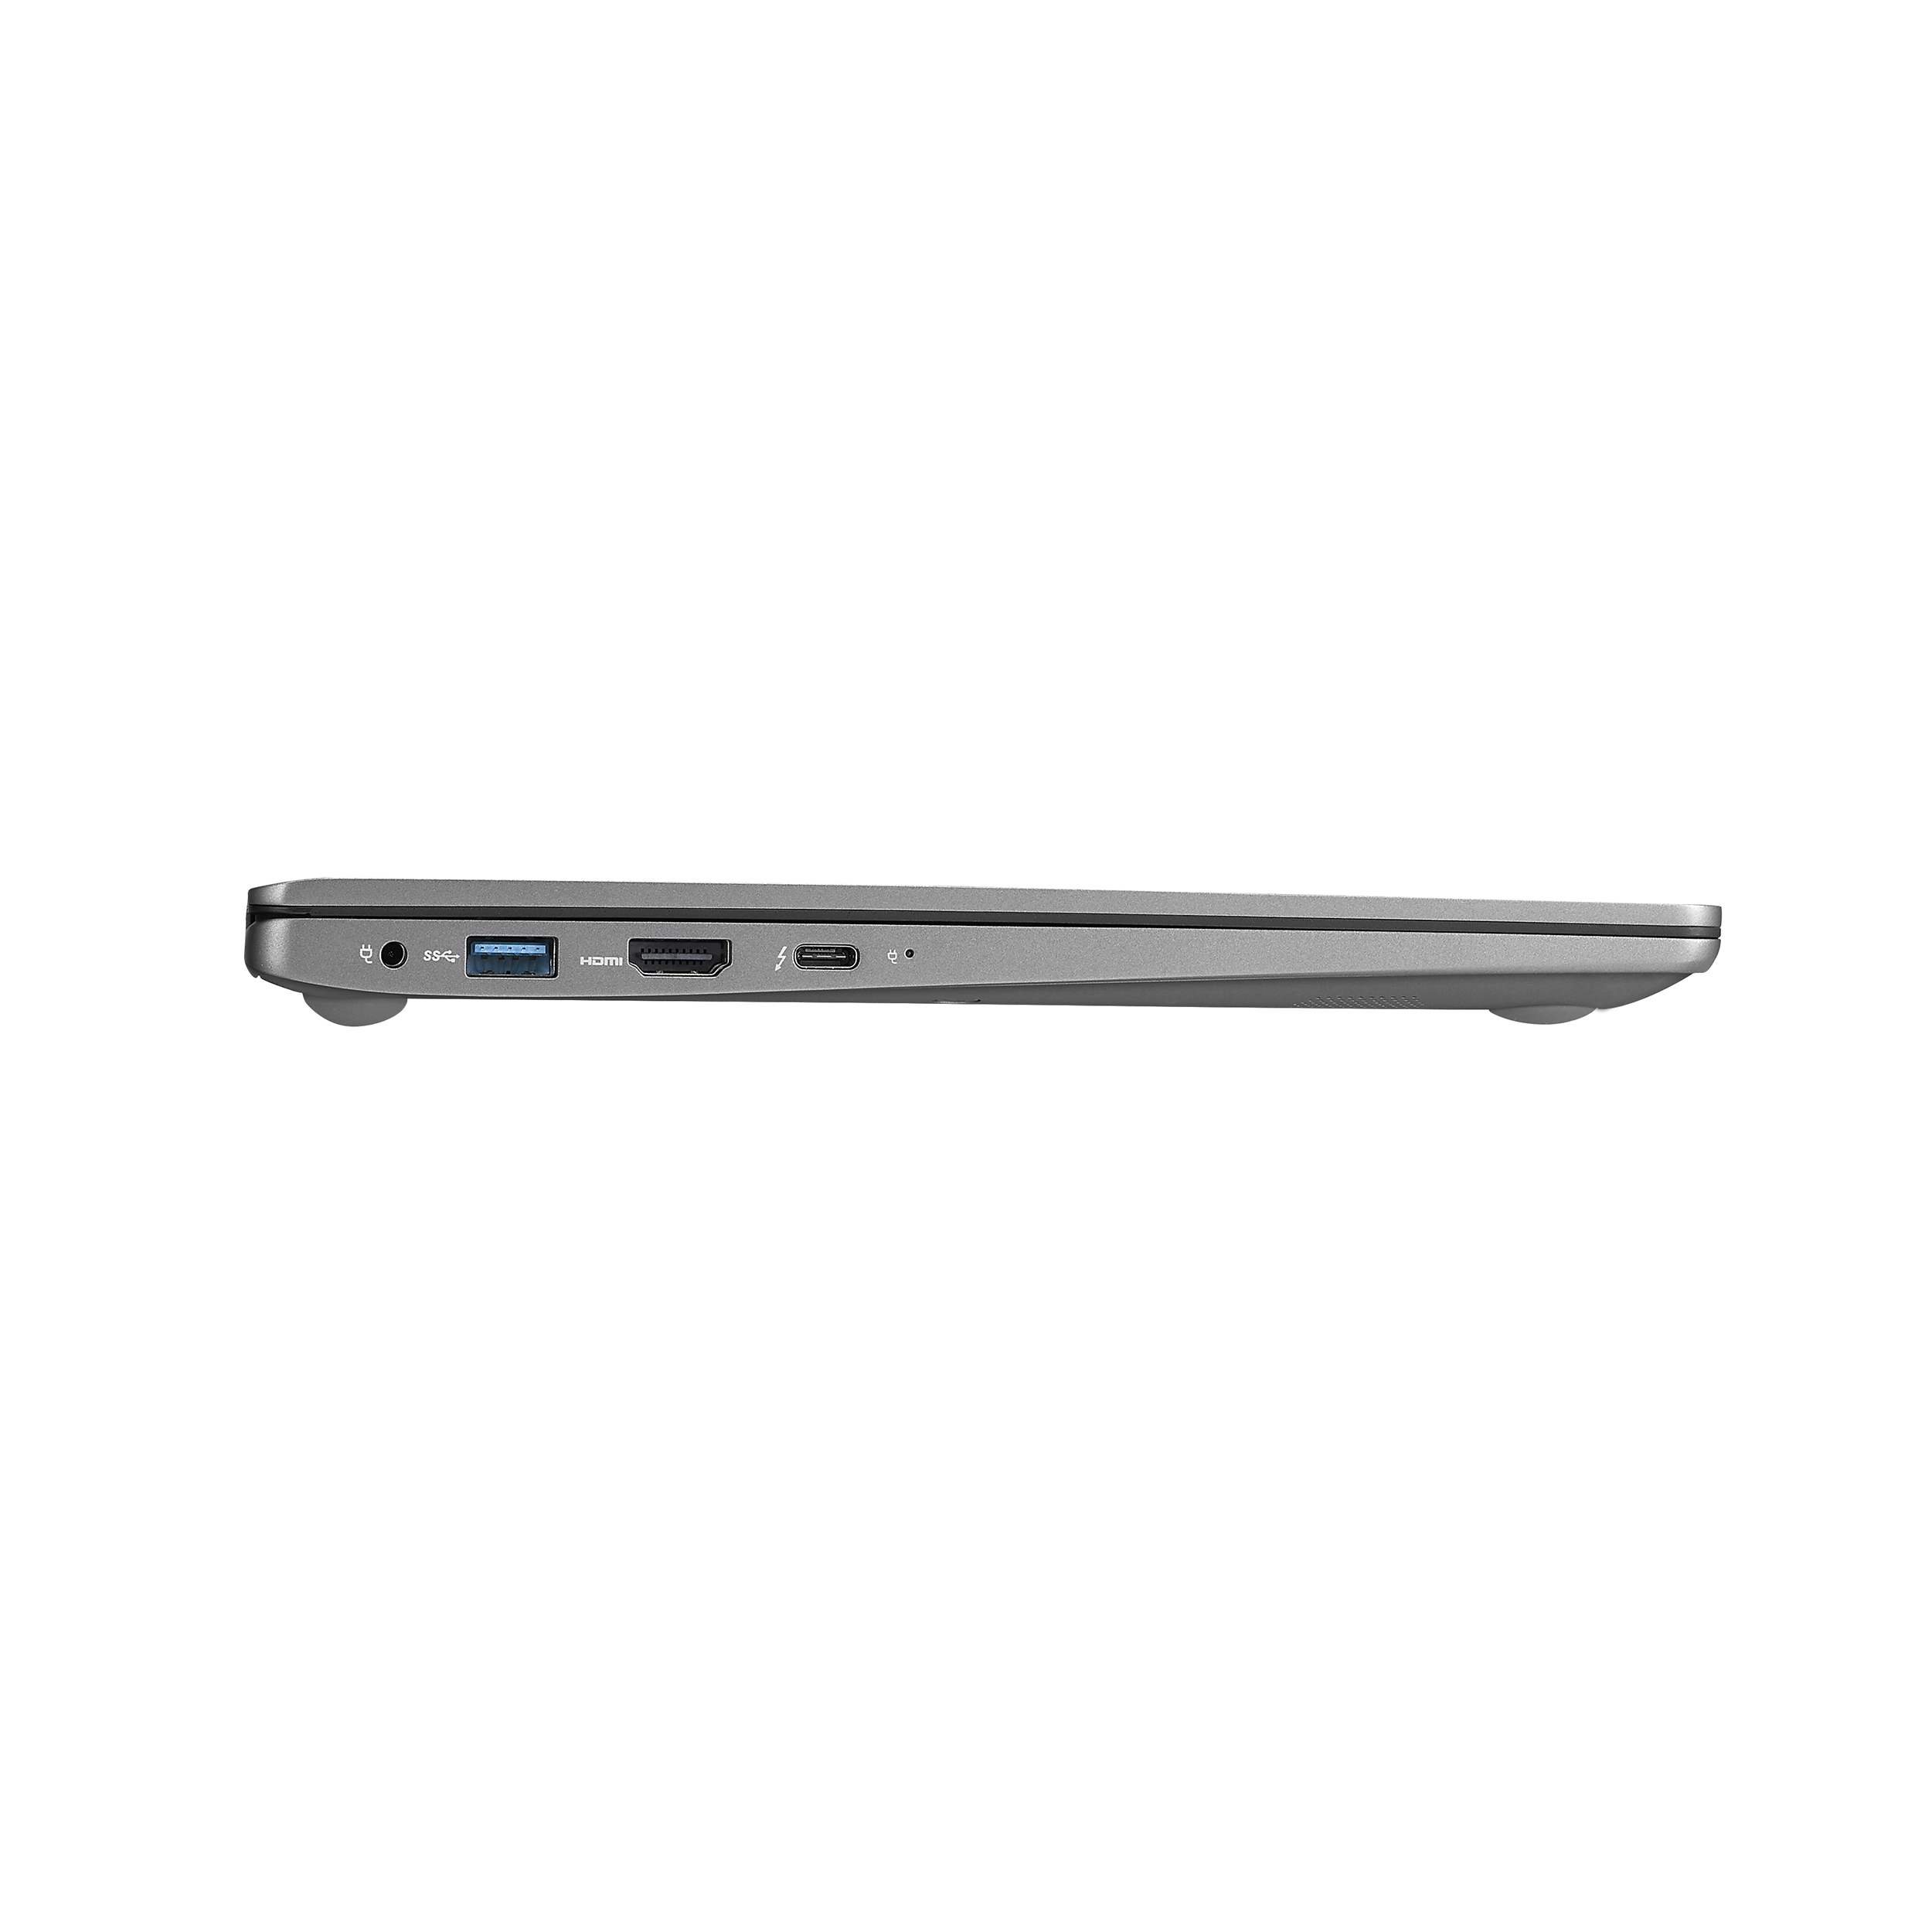 LG gram 14 inch Ultra-Lightweight Laptop with 10th Gen Intel Core Processor w/Intel Iris Plus - 14Z90N-U.AAS7U1 - image 7 of 13